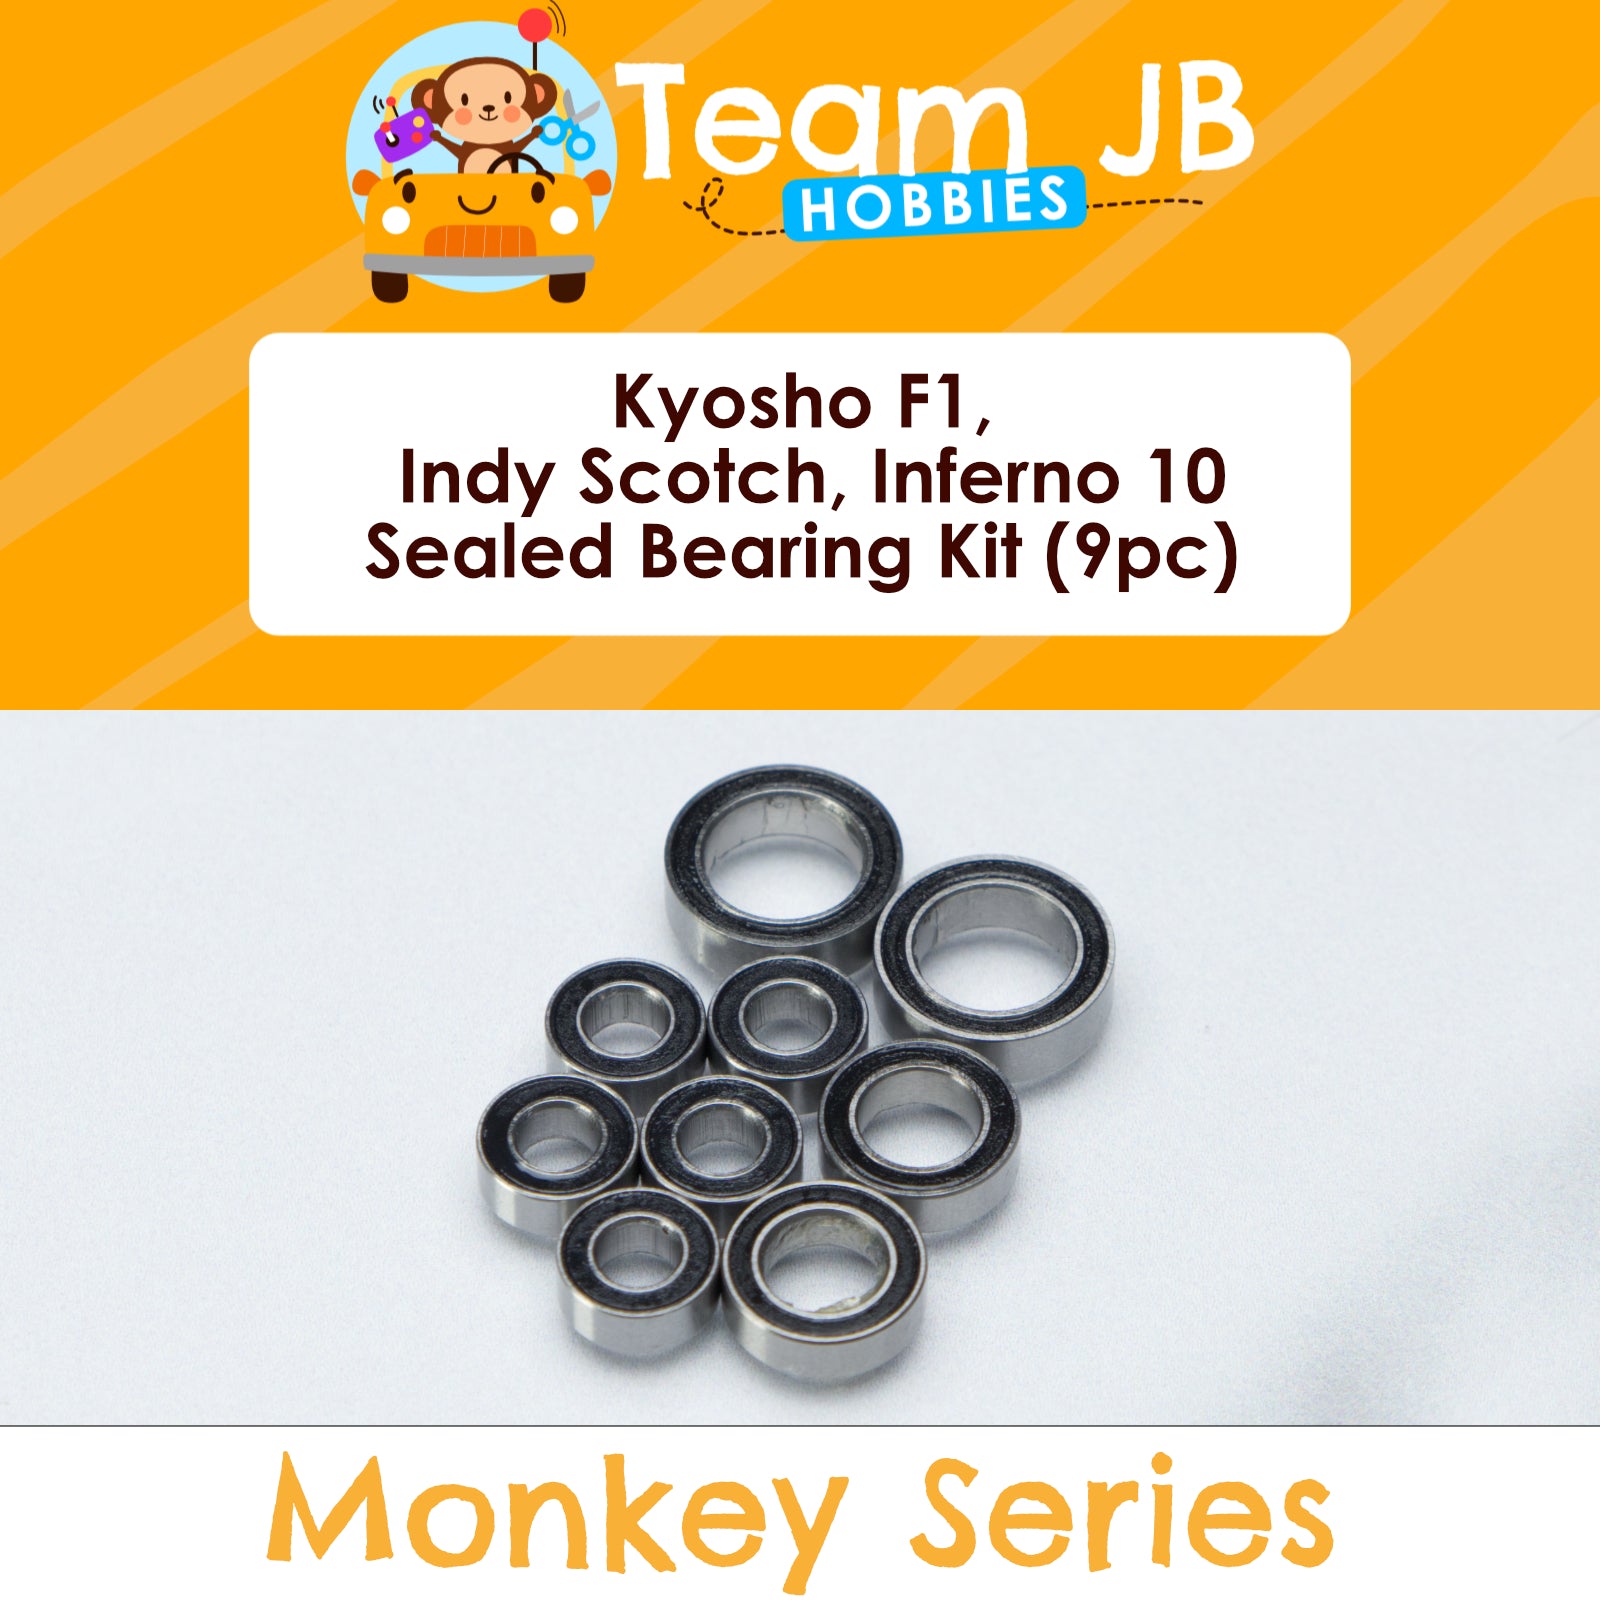 Kyosho F1, Indy Scotch, Inferno 10 - Sealed Bearing Kit